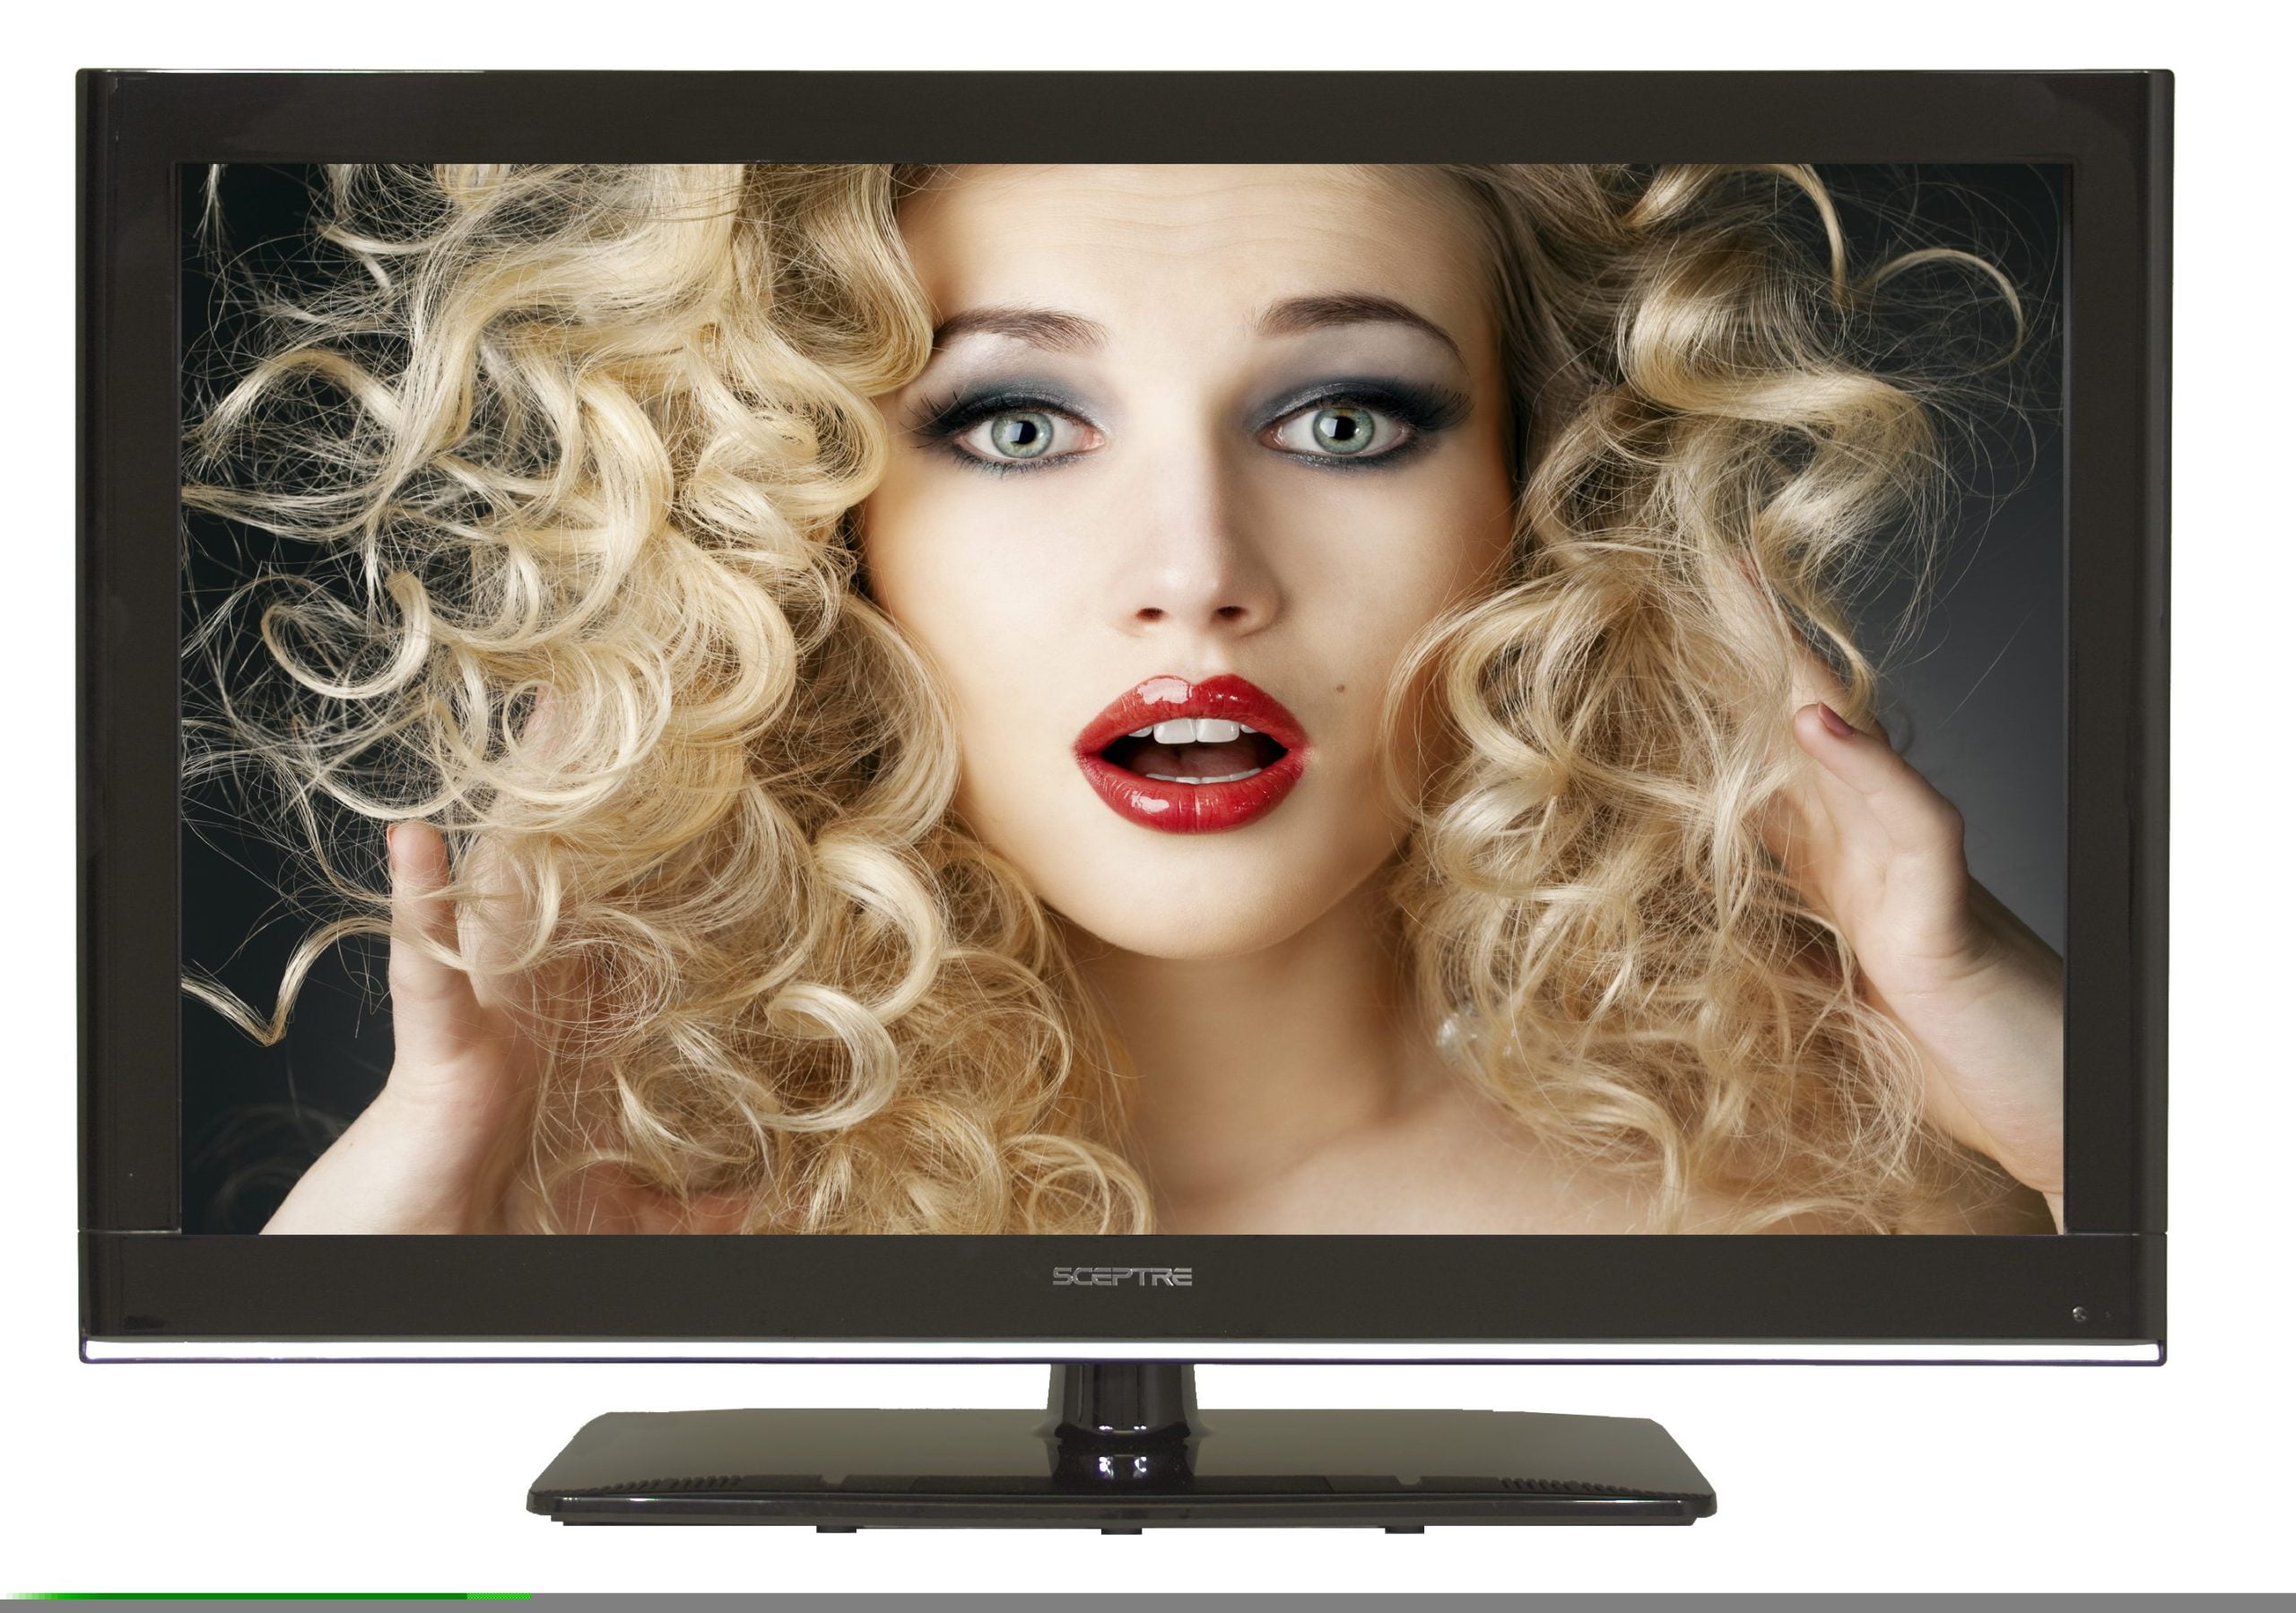 Sceptre X405BV-FMDU 40” LED HDTV Review